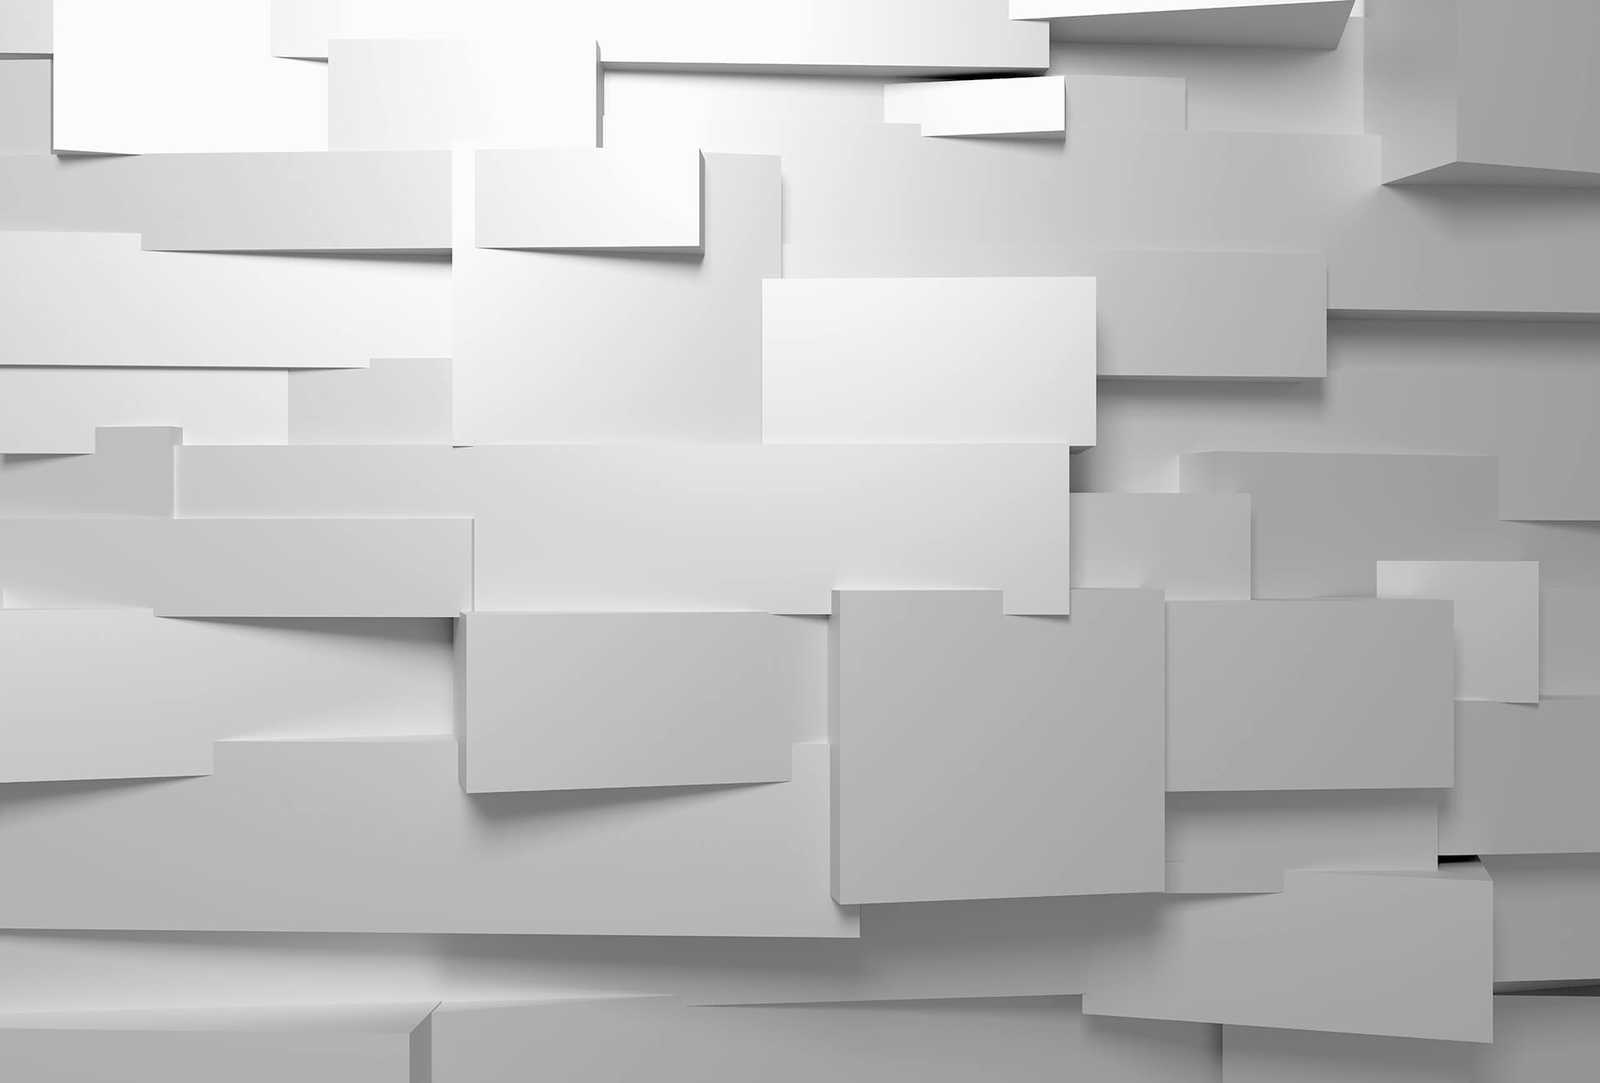         Photo wallpaper 3D Graphic Modern Facet Effect - White
    